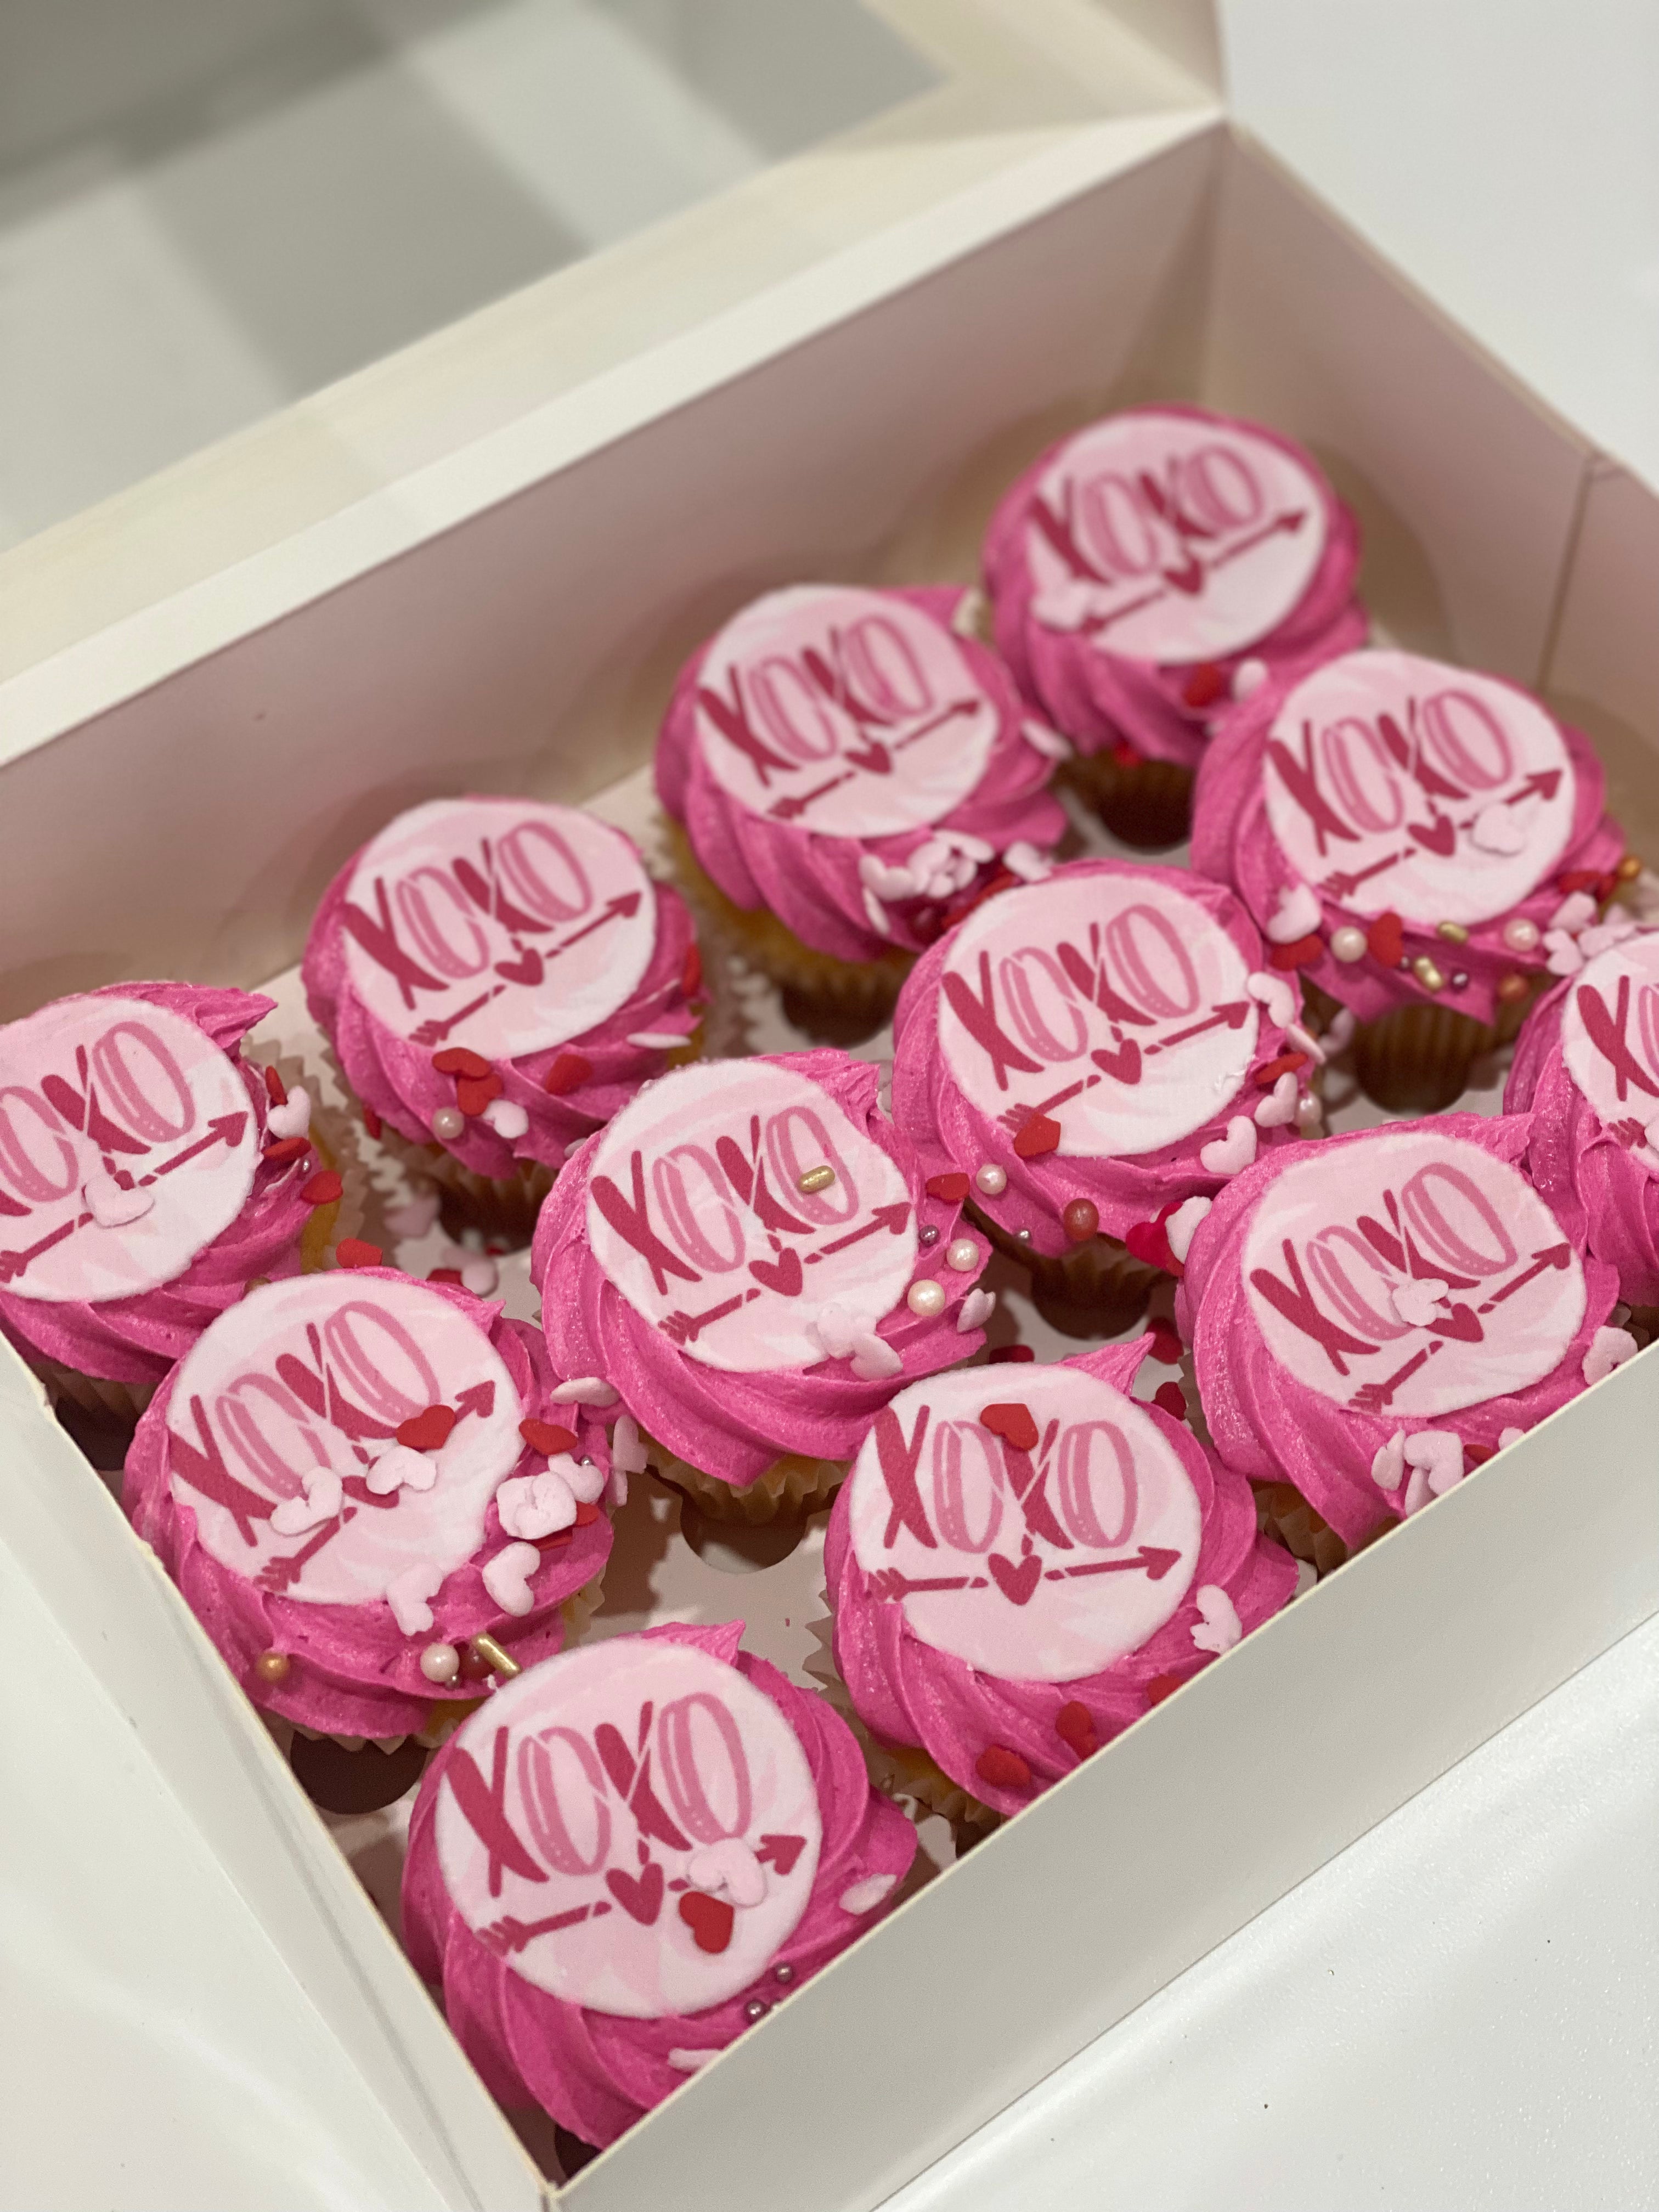 xoxo lovers  - 12 mini cupcakes